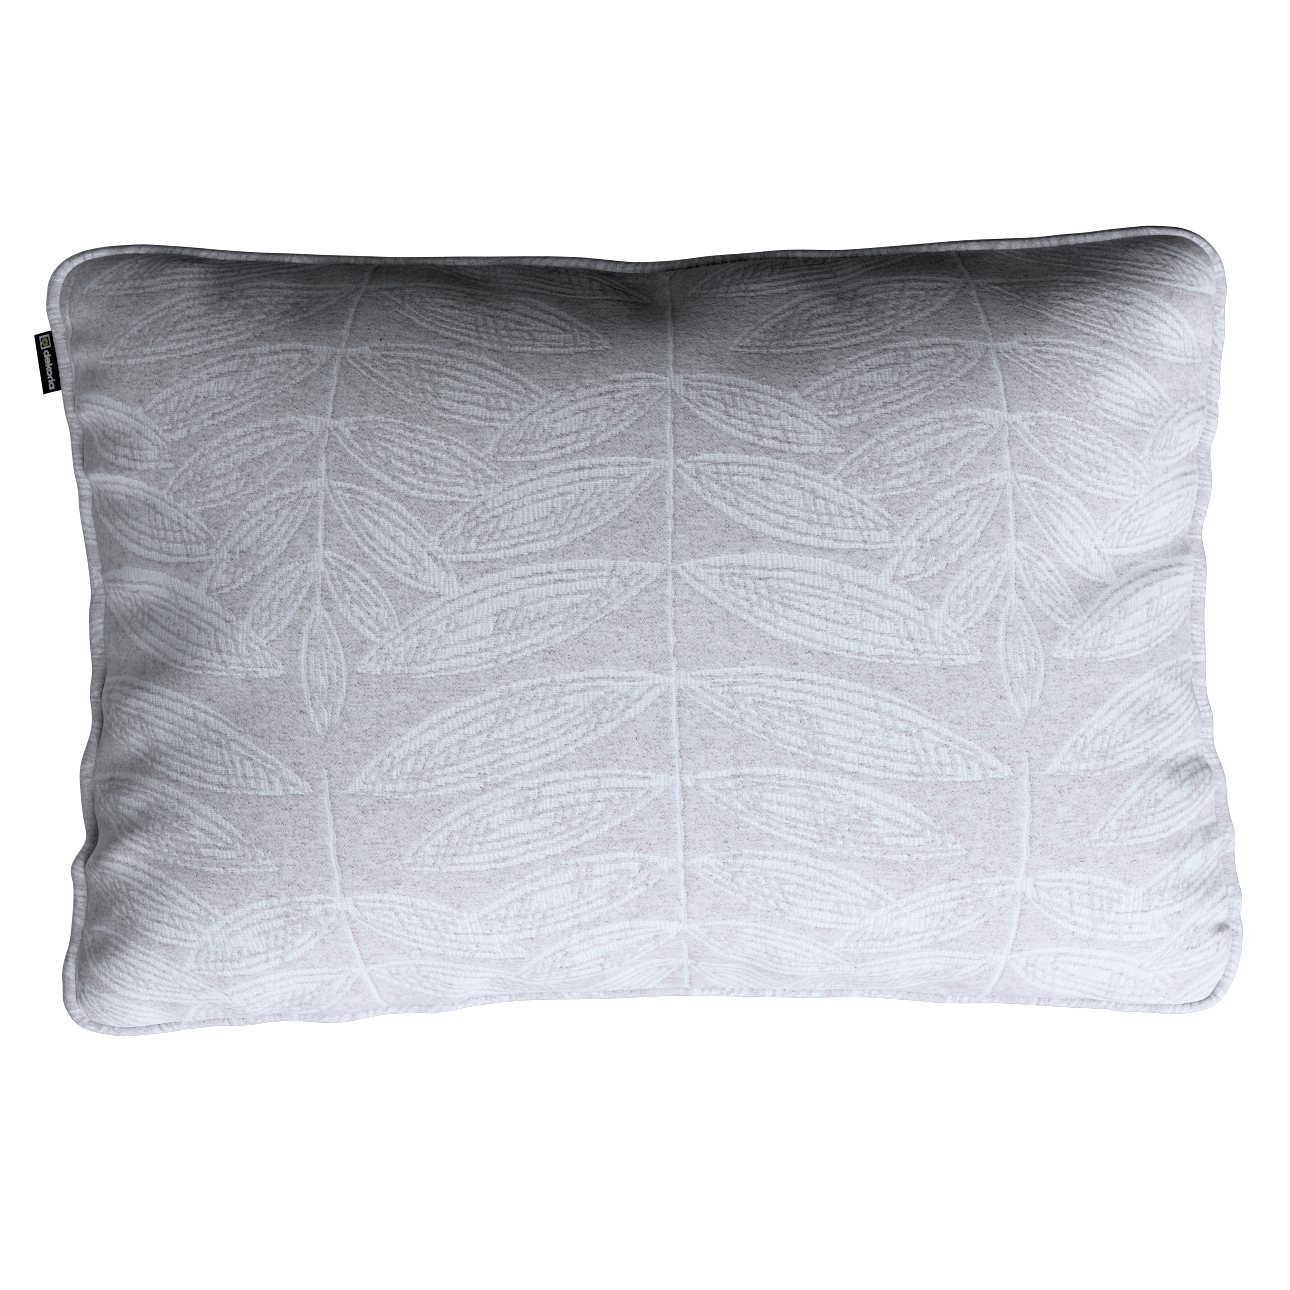 Kissenhülle Gabi mit Paspel 60x40cm, weiß-grau, 60 x 40 cm, Sunny (143-84) günstig online kaufen